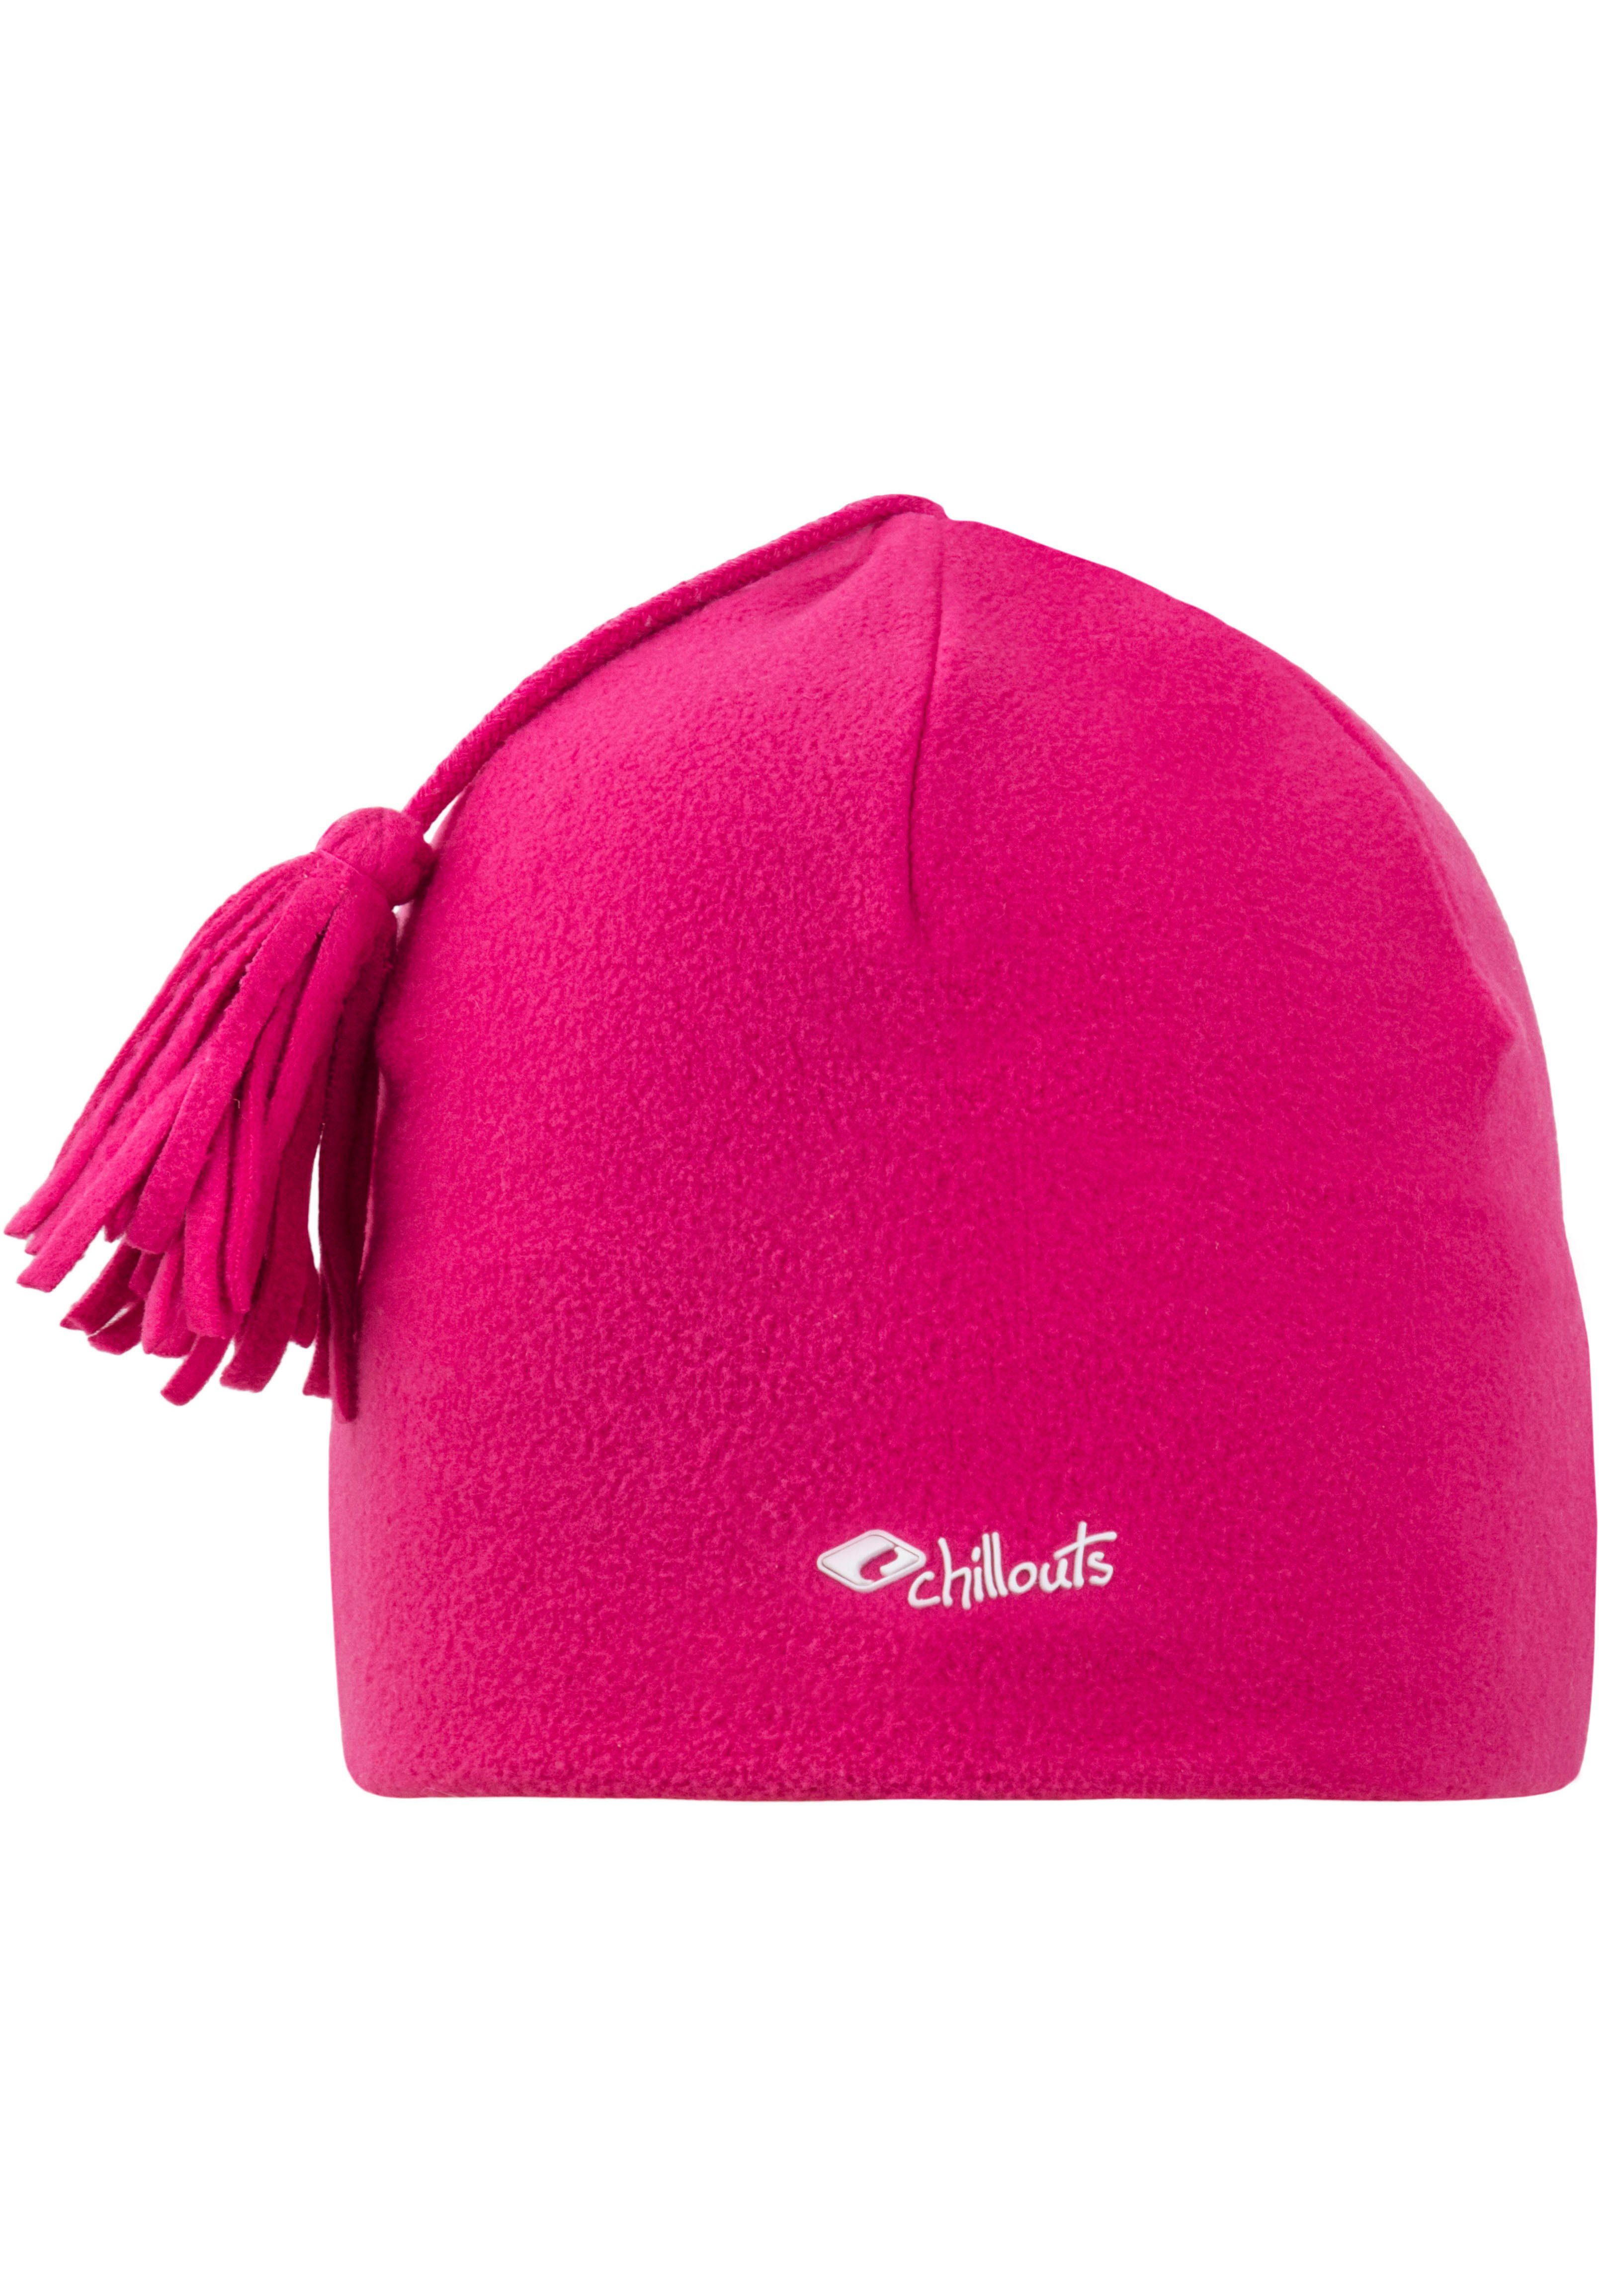 chillouts Fleecemütze Freeze Fleece Pom pink Hat